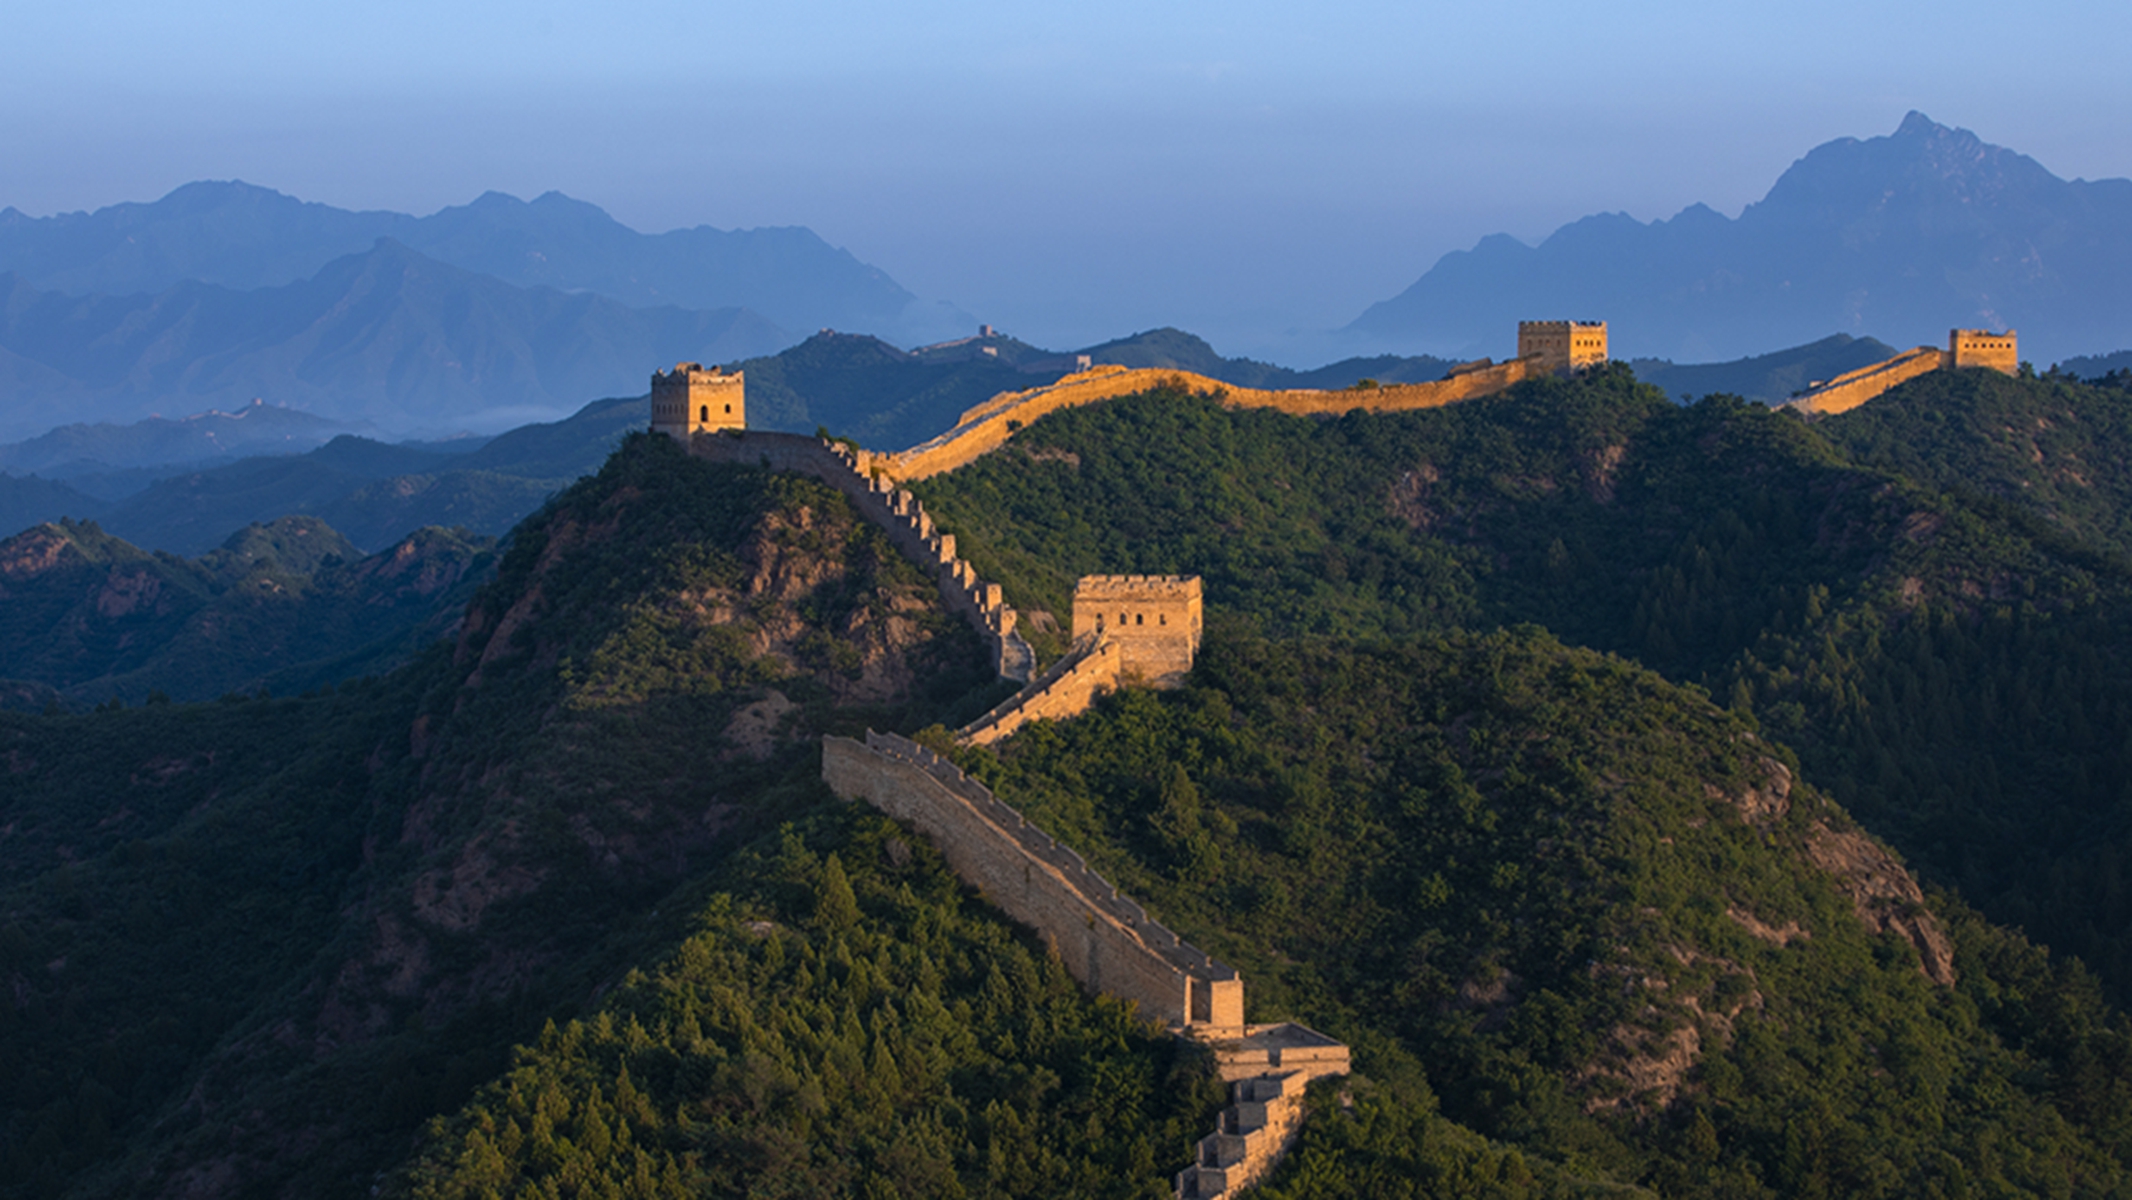 Live: Bask in the serene grandeur of Jinshanling Great Wall